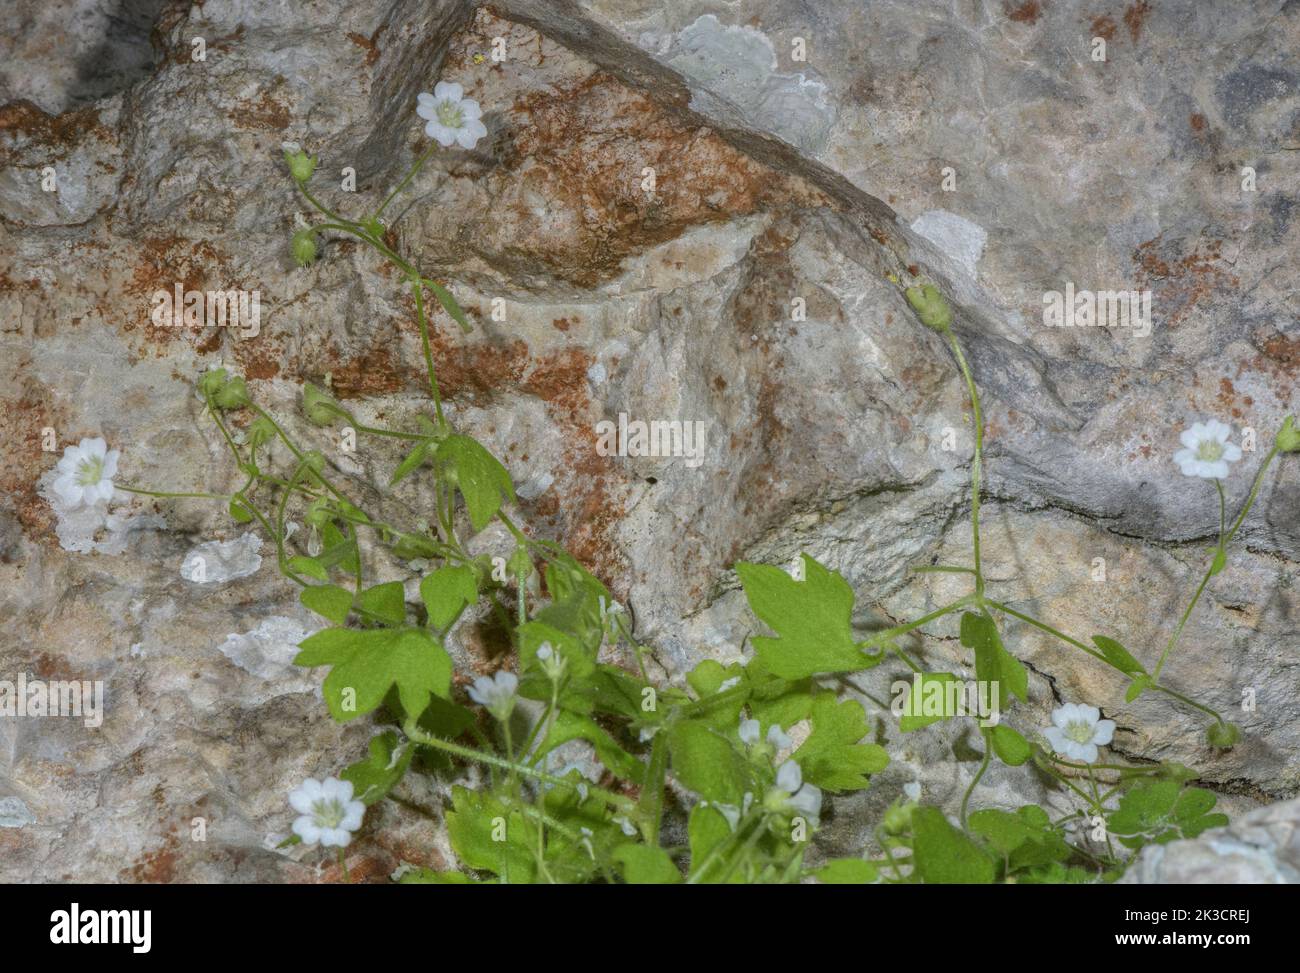 Saxifraga, un saxifraga bienal poco común, que crece en un acantilado de piedra caliza cerca de Monte Baldo, Italia. Foto de stock